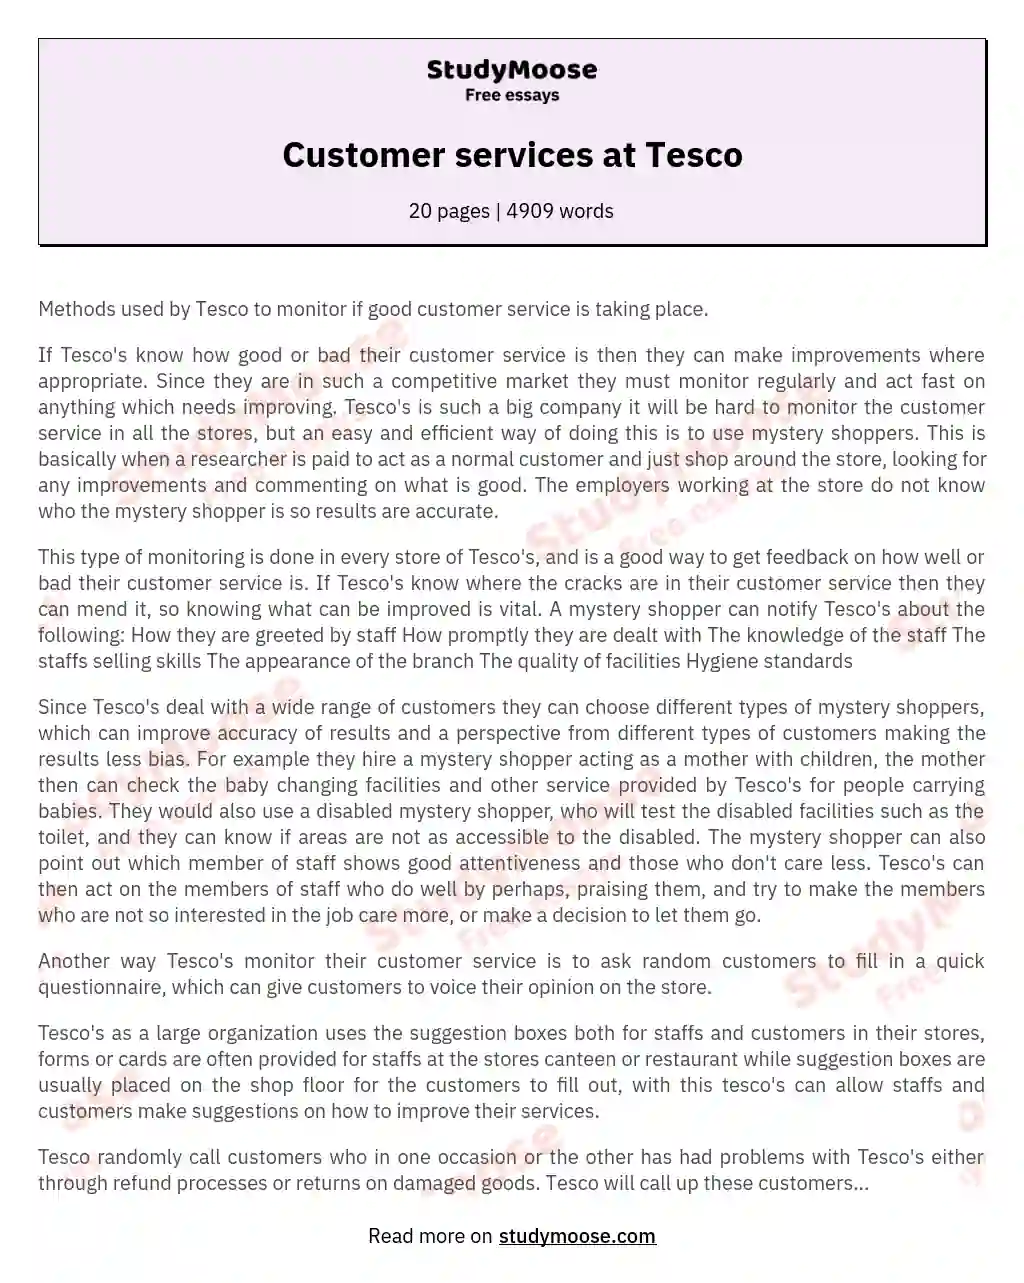 Customer services at Tesco essay